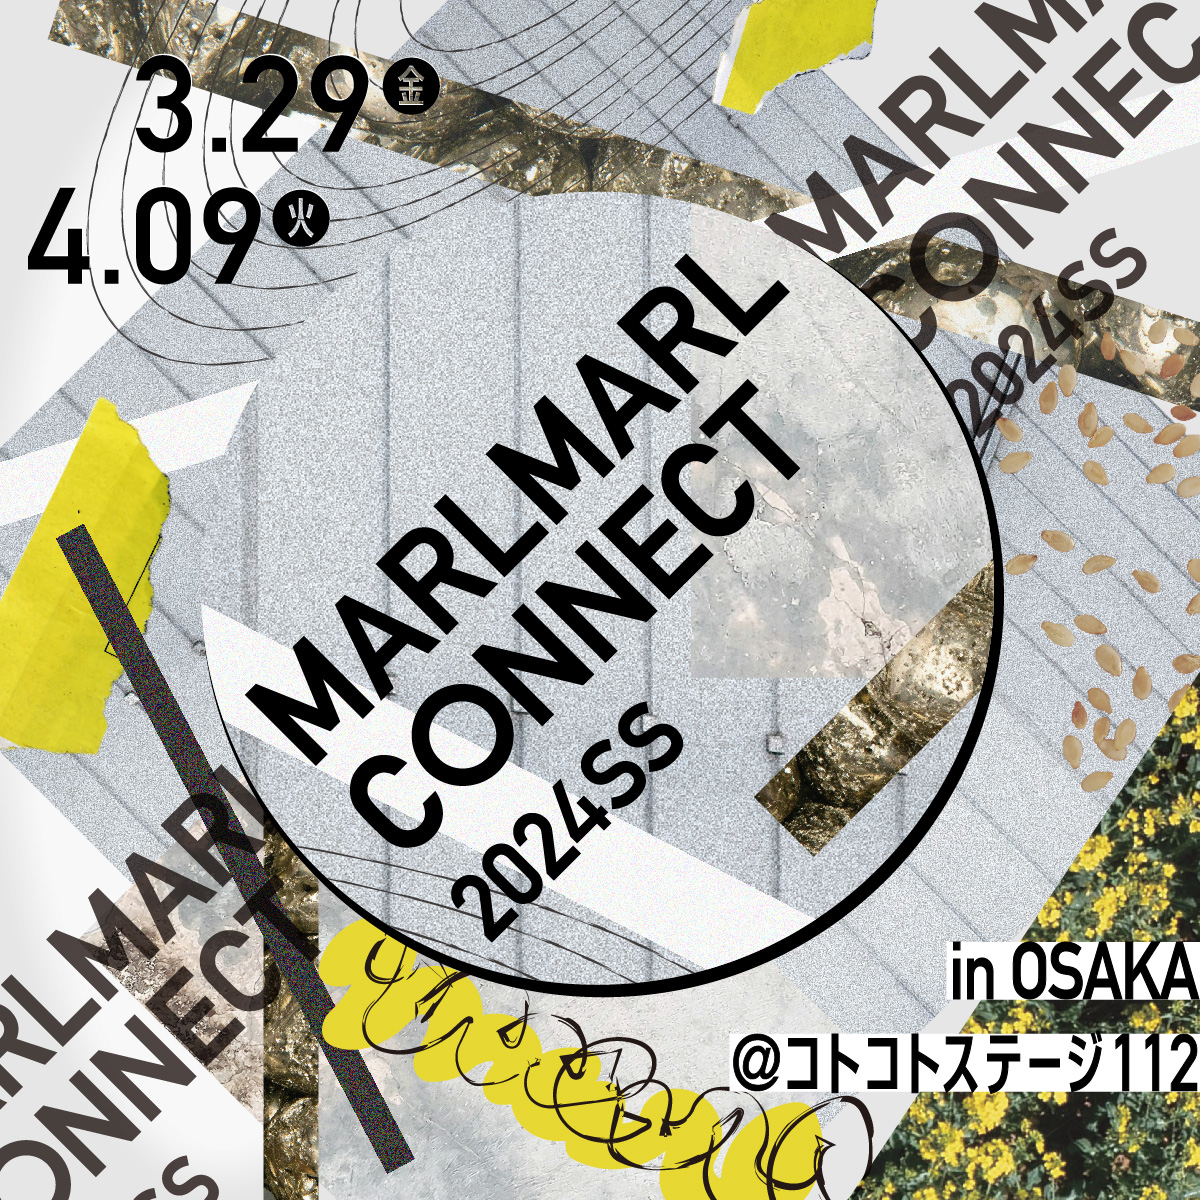 【3/29〜 4/9】MARLMARL CONNECT in OSAKA 開催 3.18(MON.)